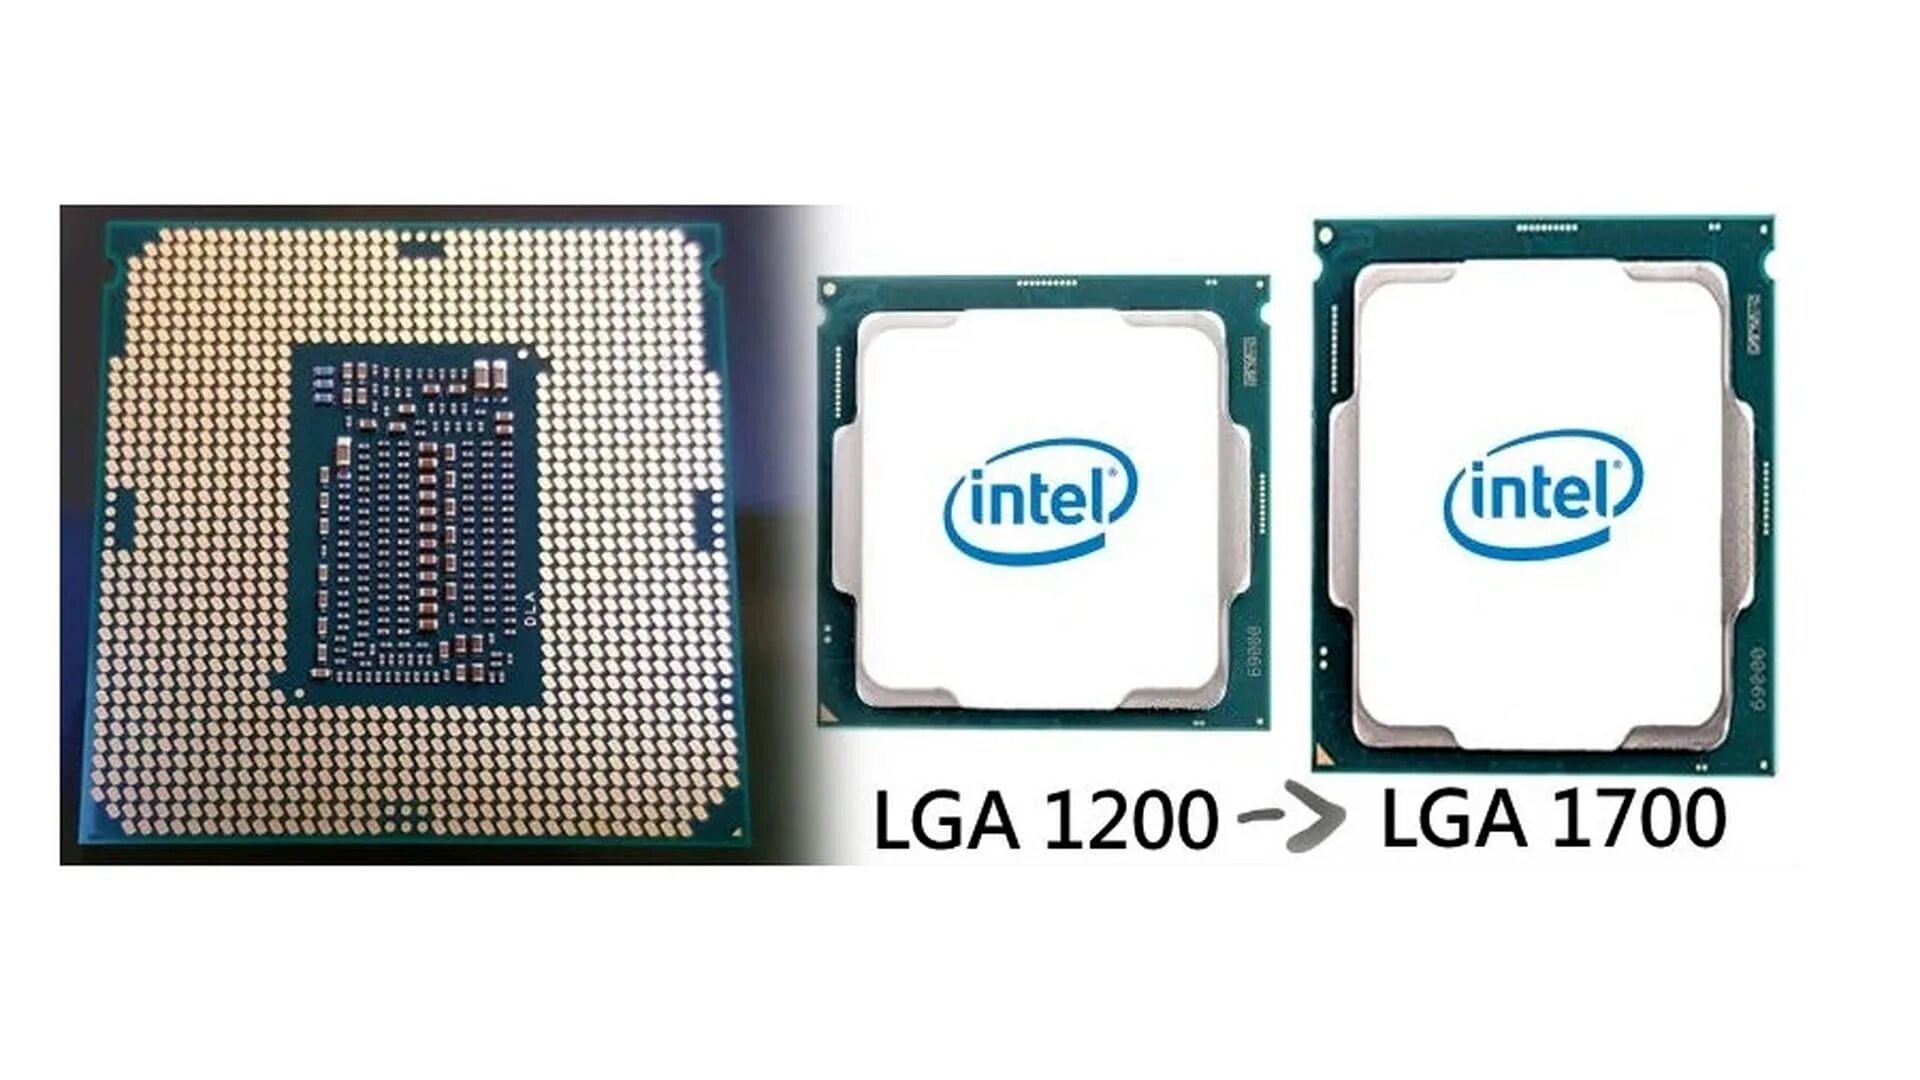 Lga 1700 цена. Сокет Интел 1700. Intel Core Socket 1700. LGA 1700 vs LGA 1200 процессор. Сокет Интел лга 1700.